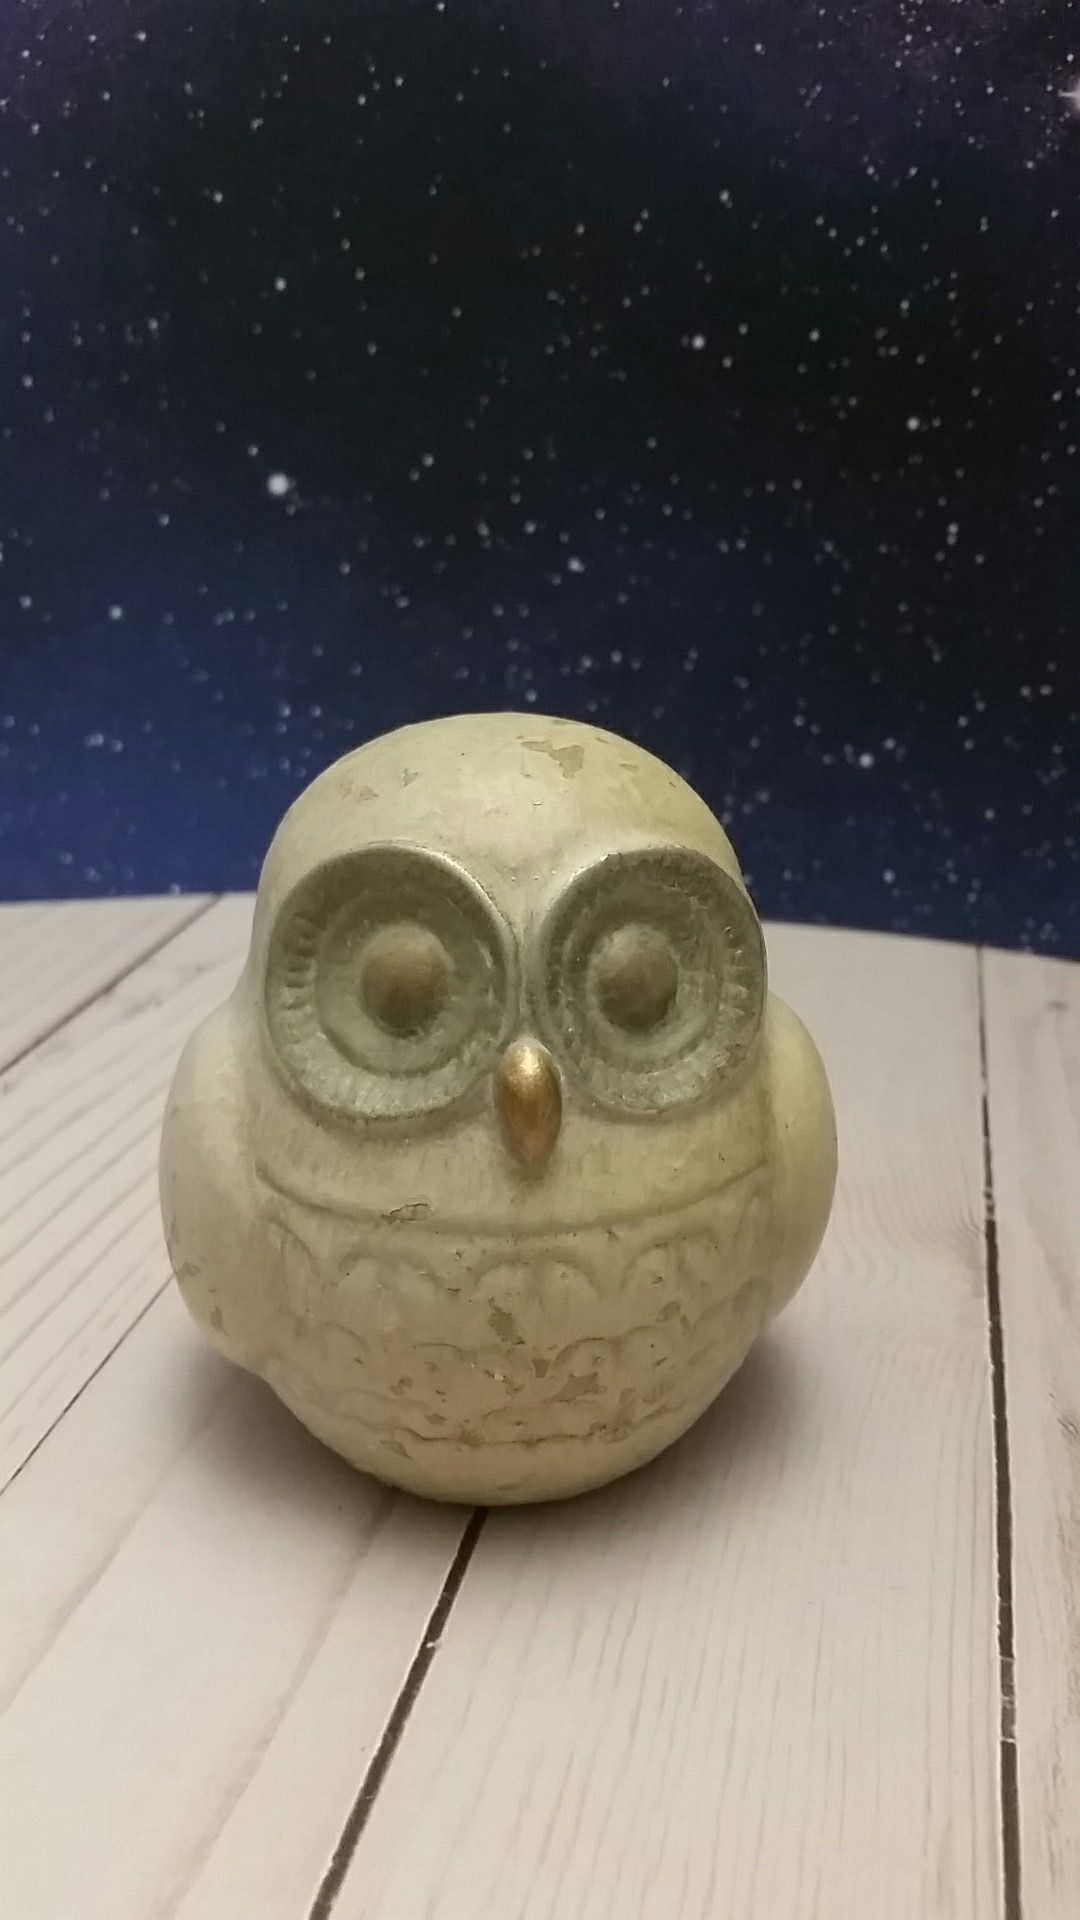 Hobby Lobby Ceramic Home Accents Vintage Owl